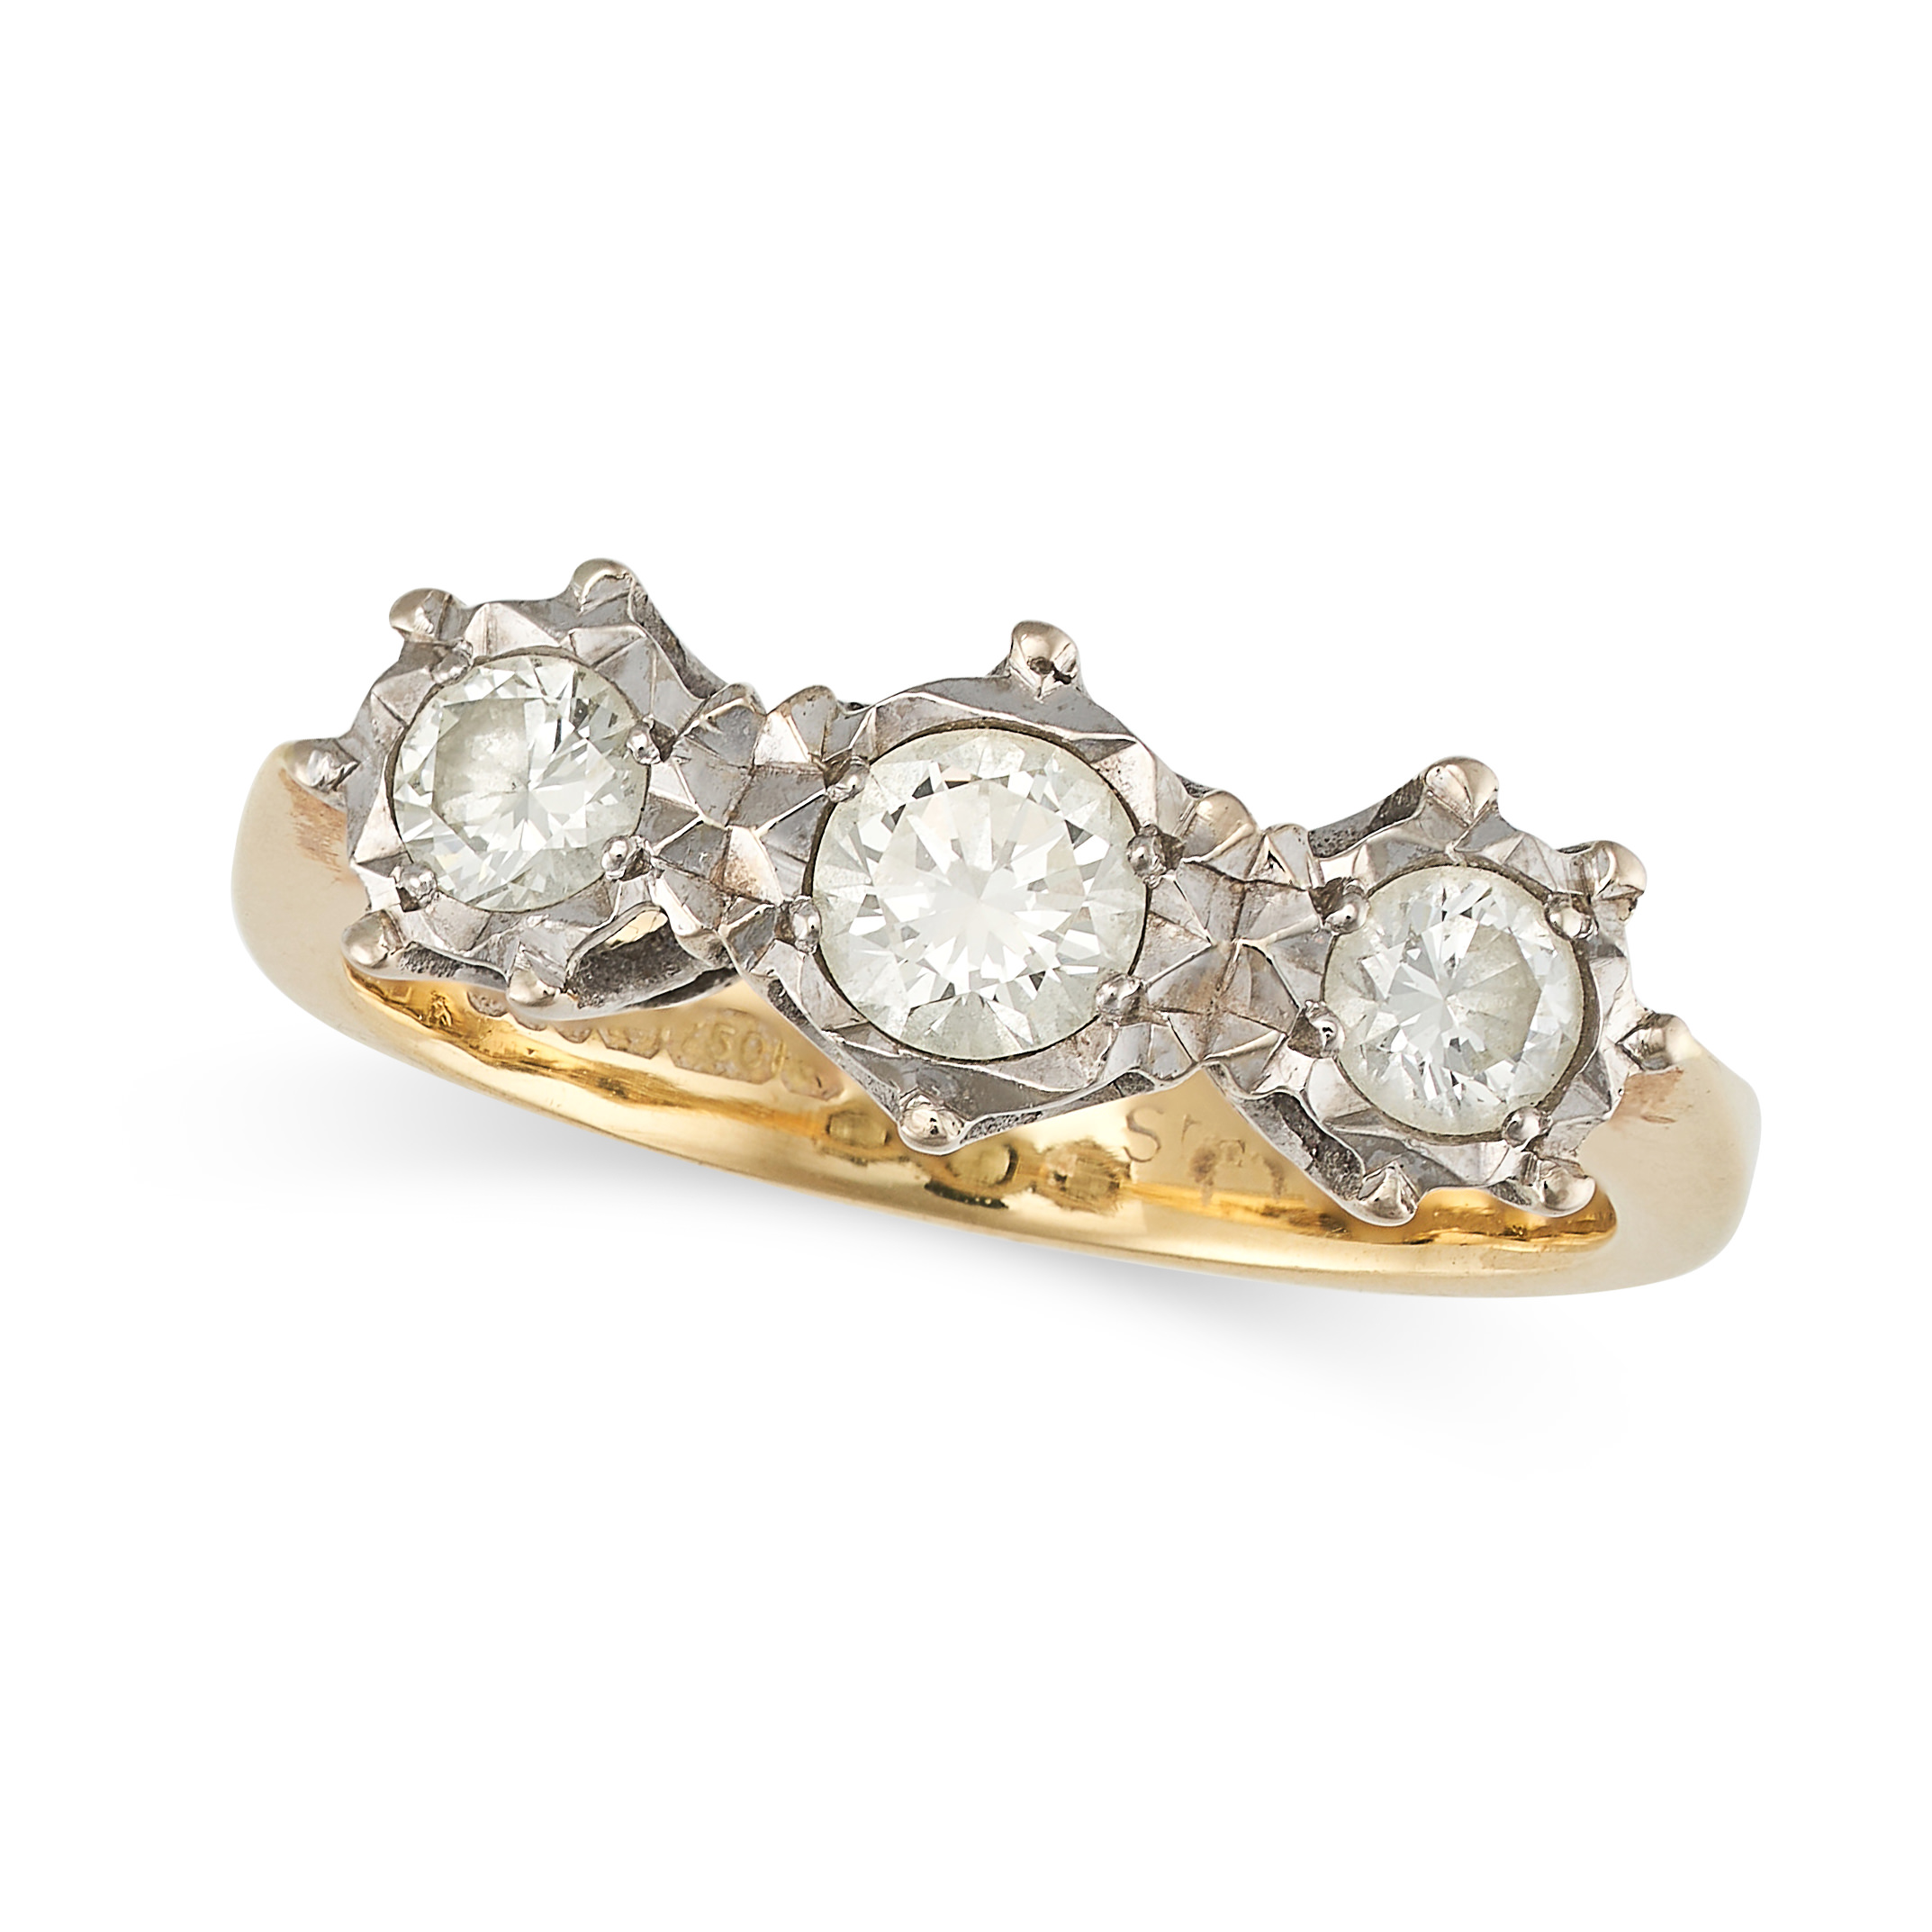 A DIAMOND THREE STONE RING in 18ct yellow gold, set with three round brilliant cut diamonds, part...